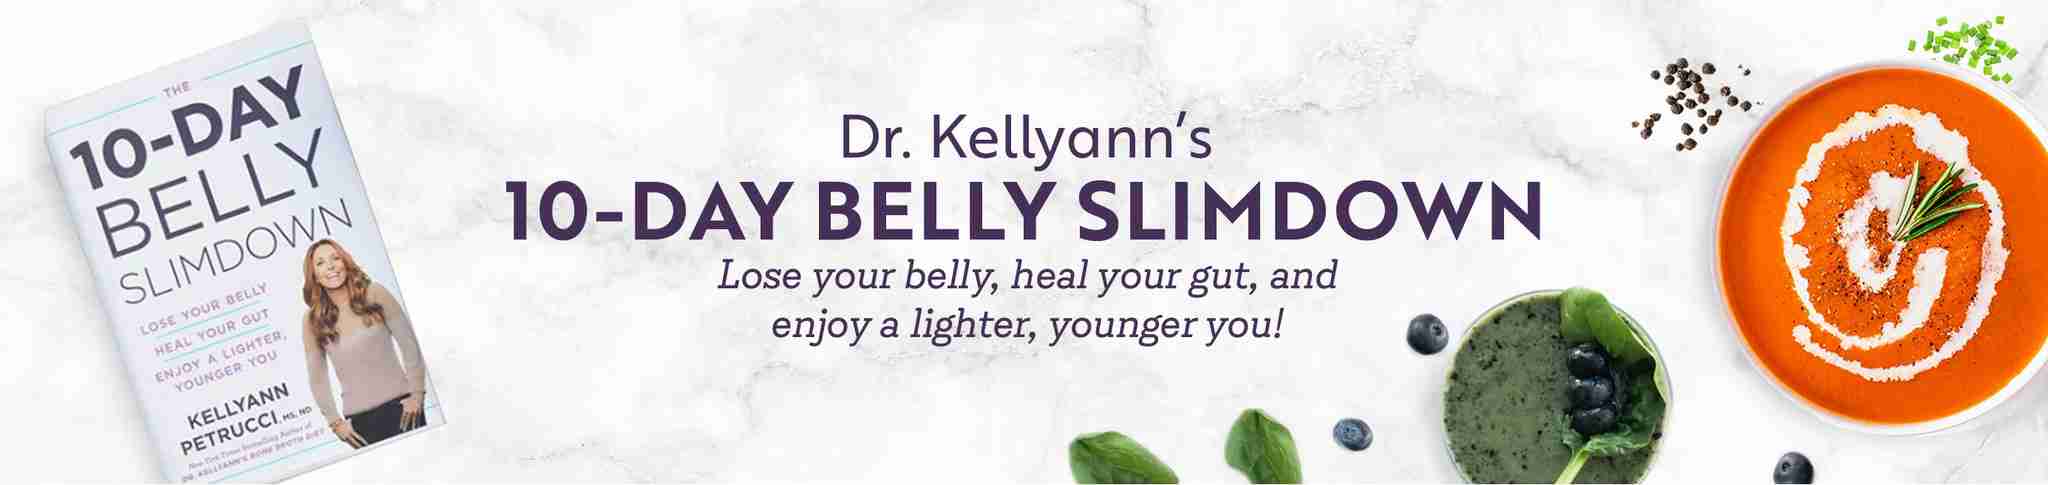 Dr. Kellyann's 10 day belly slimdown